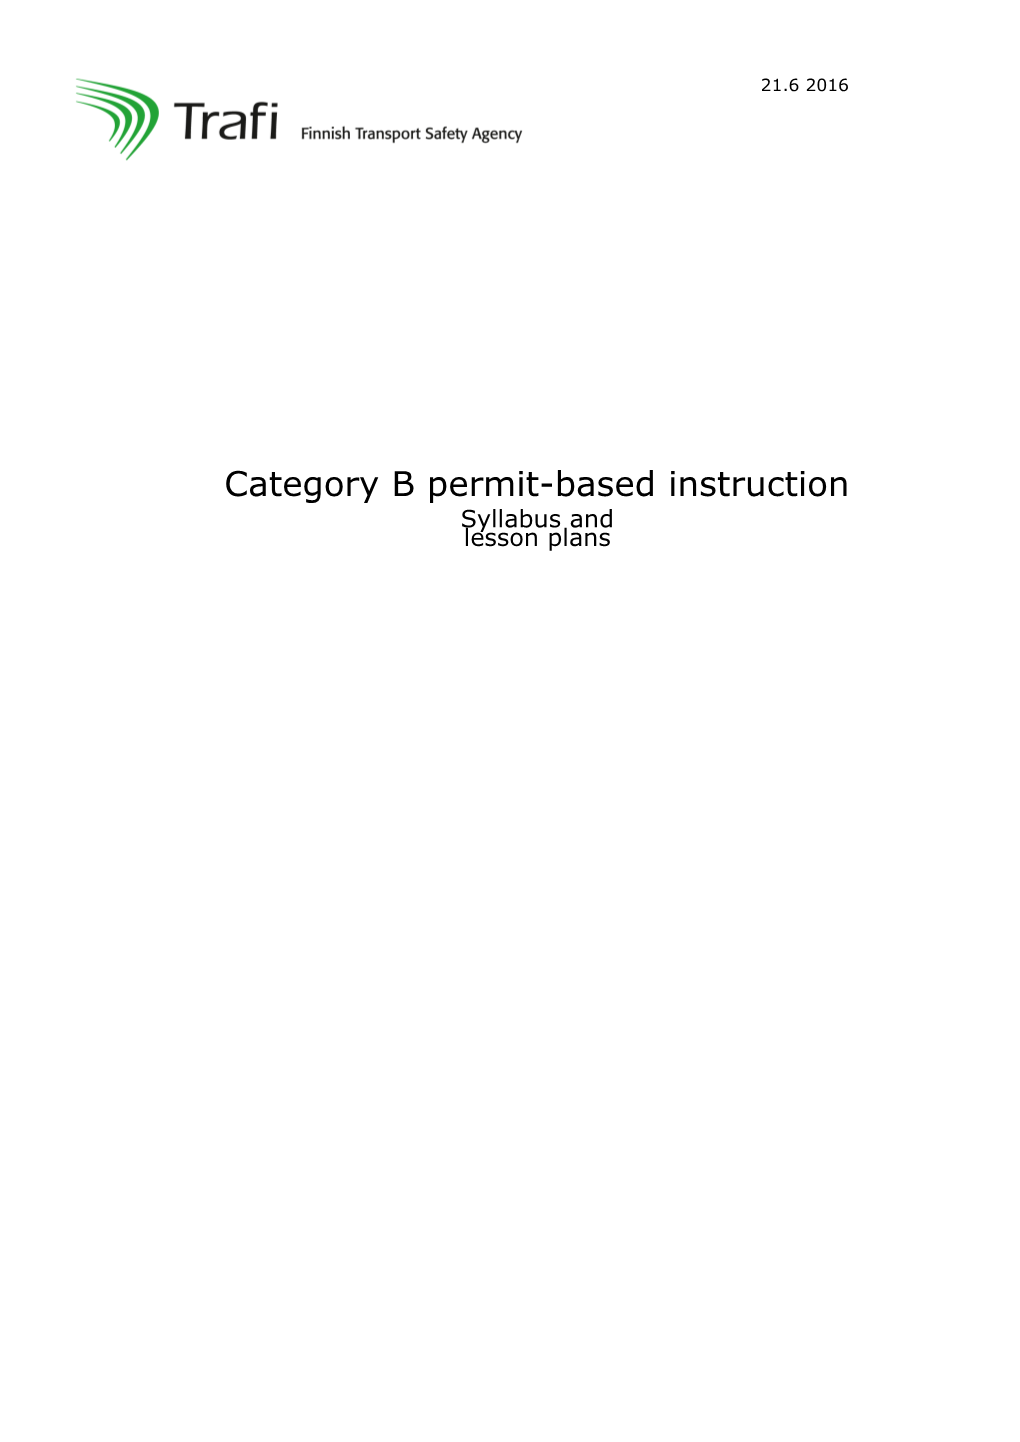 Category B Permit-Based Instruction